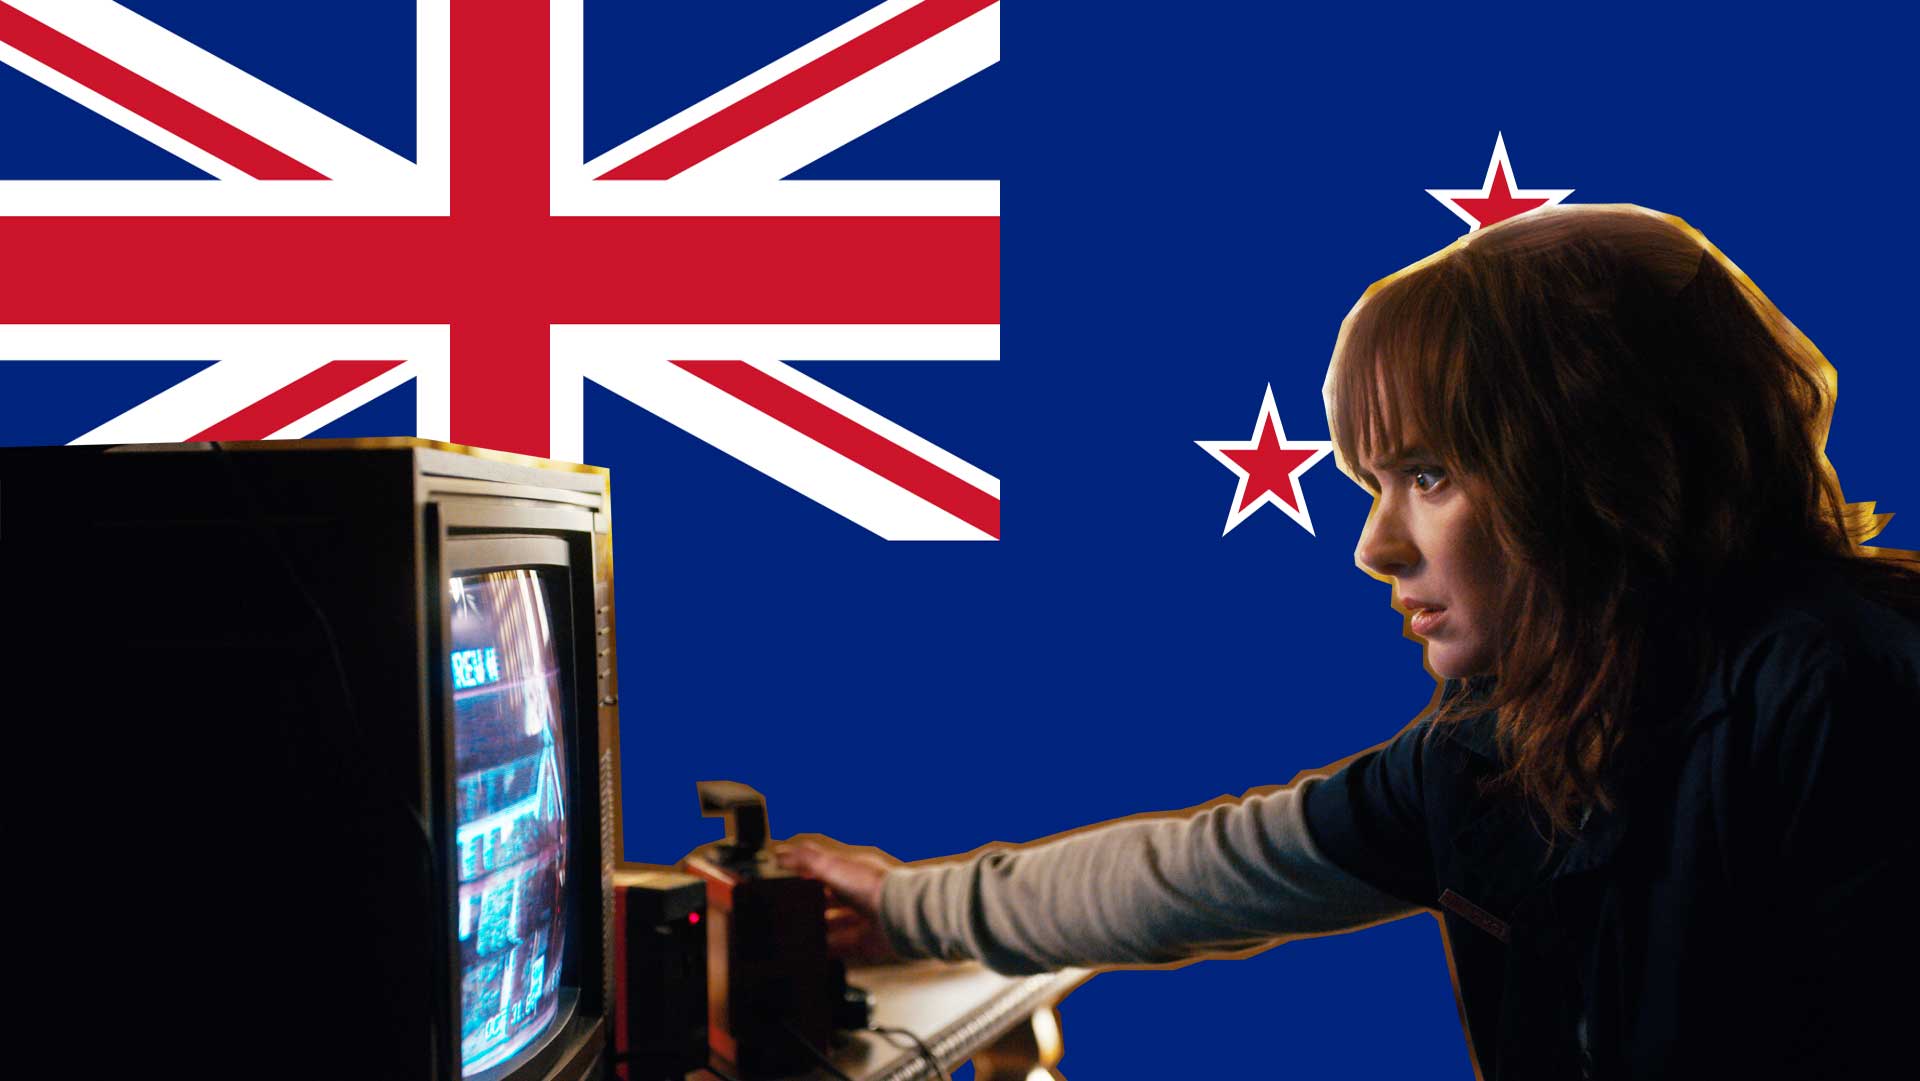 New Zealand’s 2017 Netflix viewing habits revealed